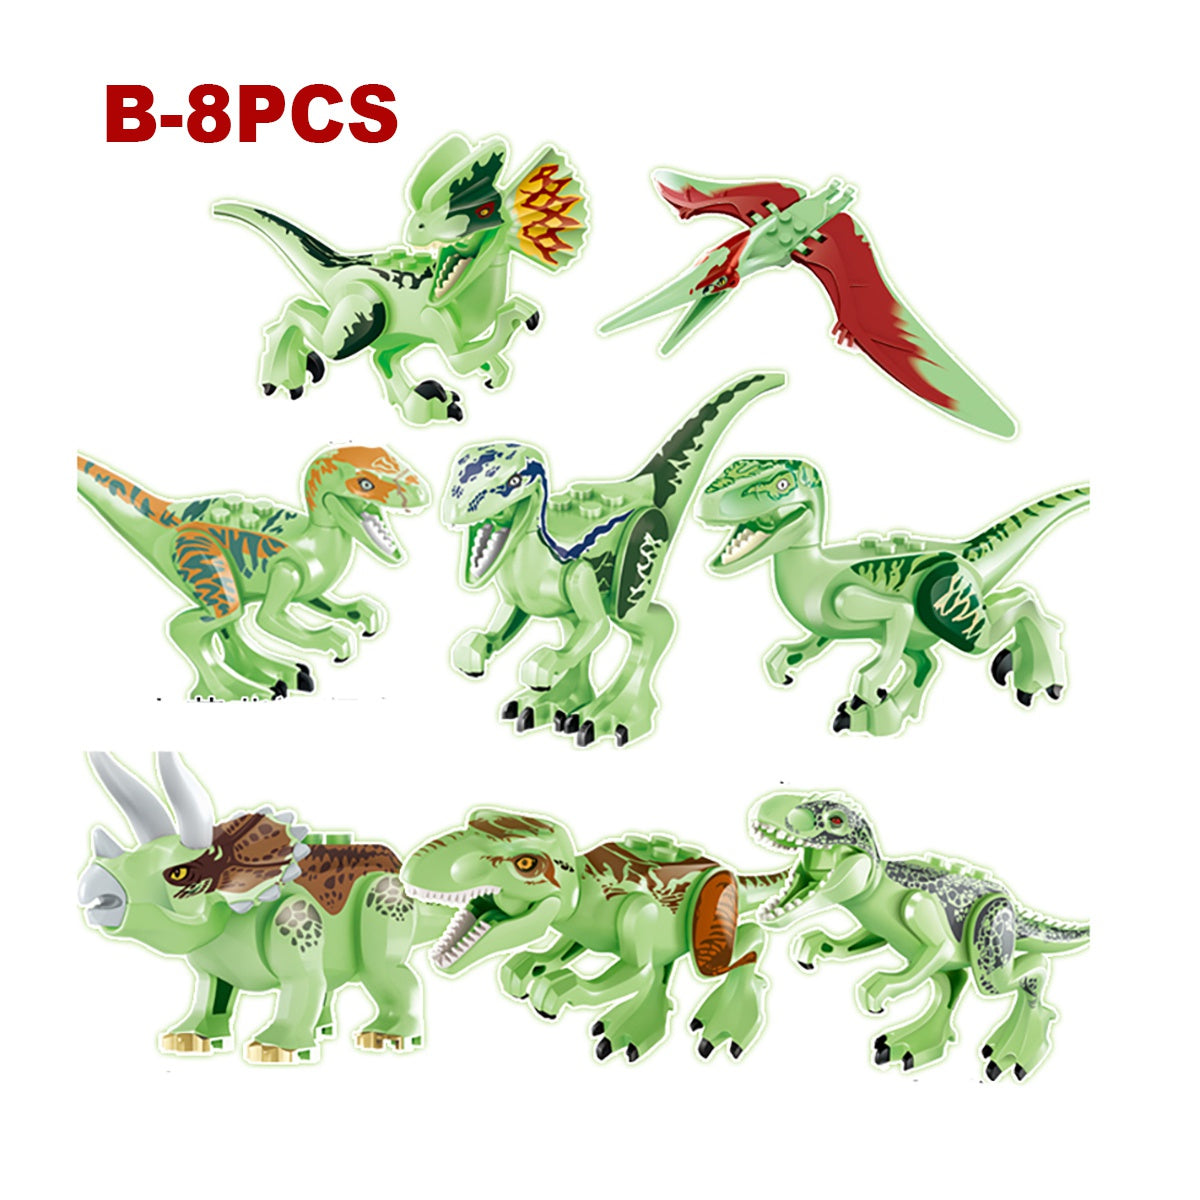 8PCS Mini Dinosaurs Building Toys for Kids (9 Styles)